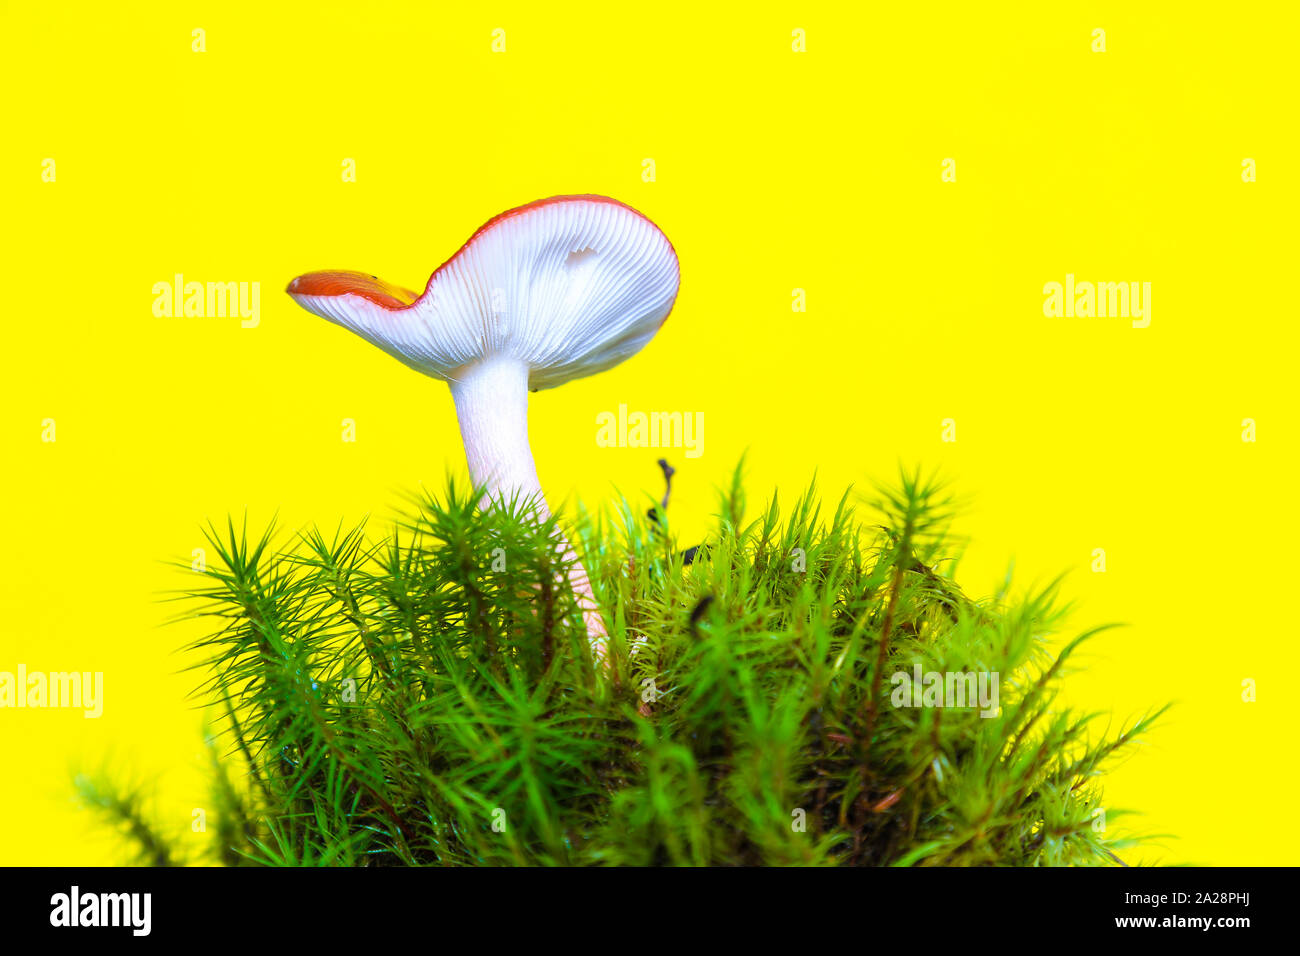 Isolated mushroom over yellow with green moss, enchanted fairytale mushroom Stock Photo